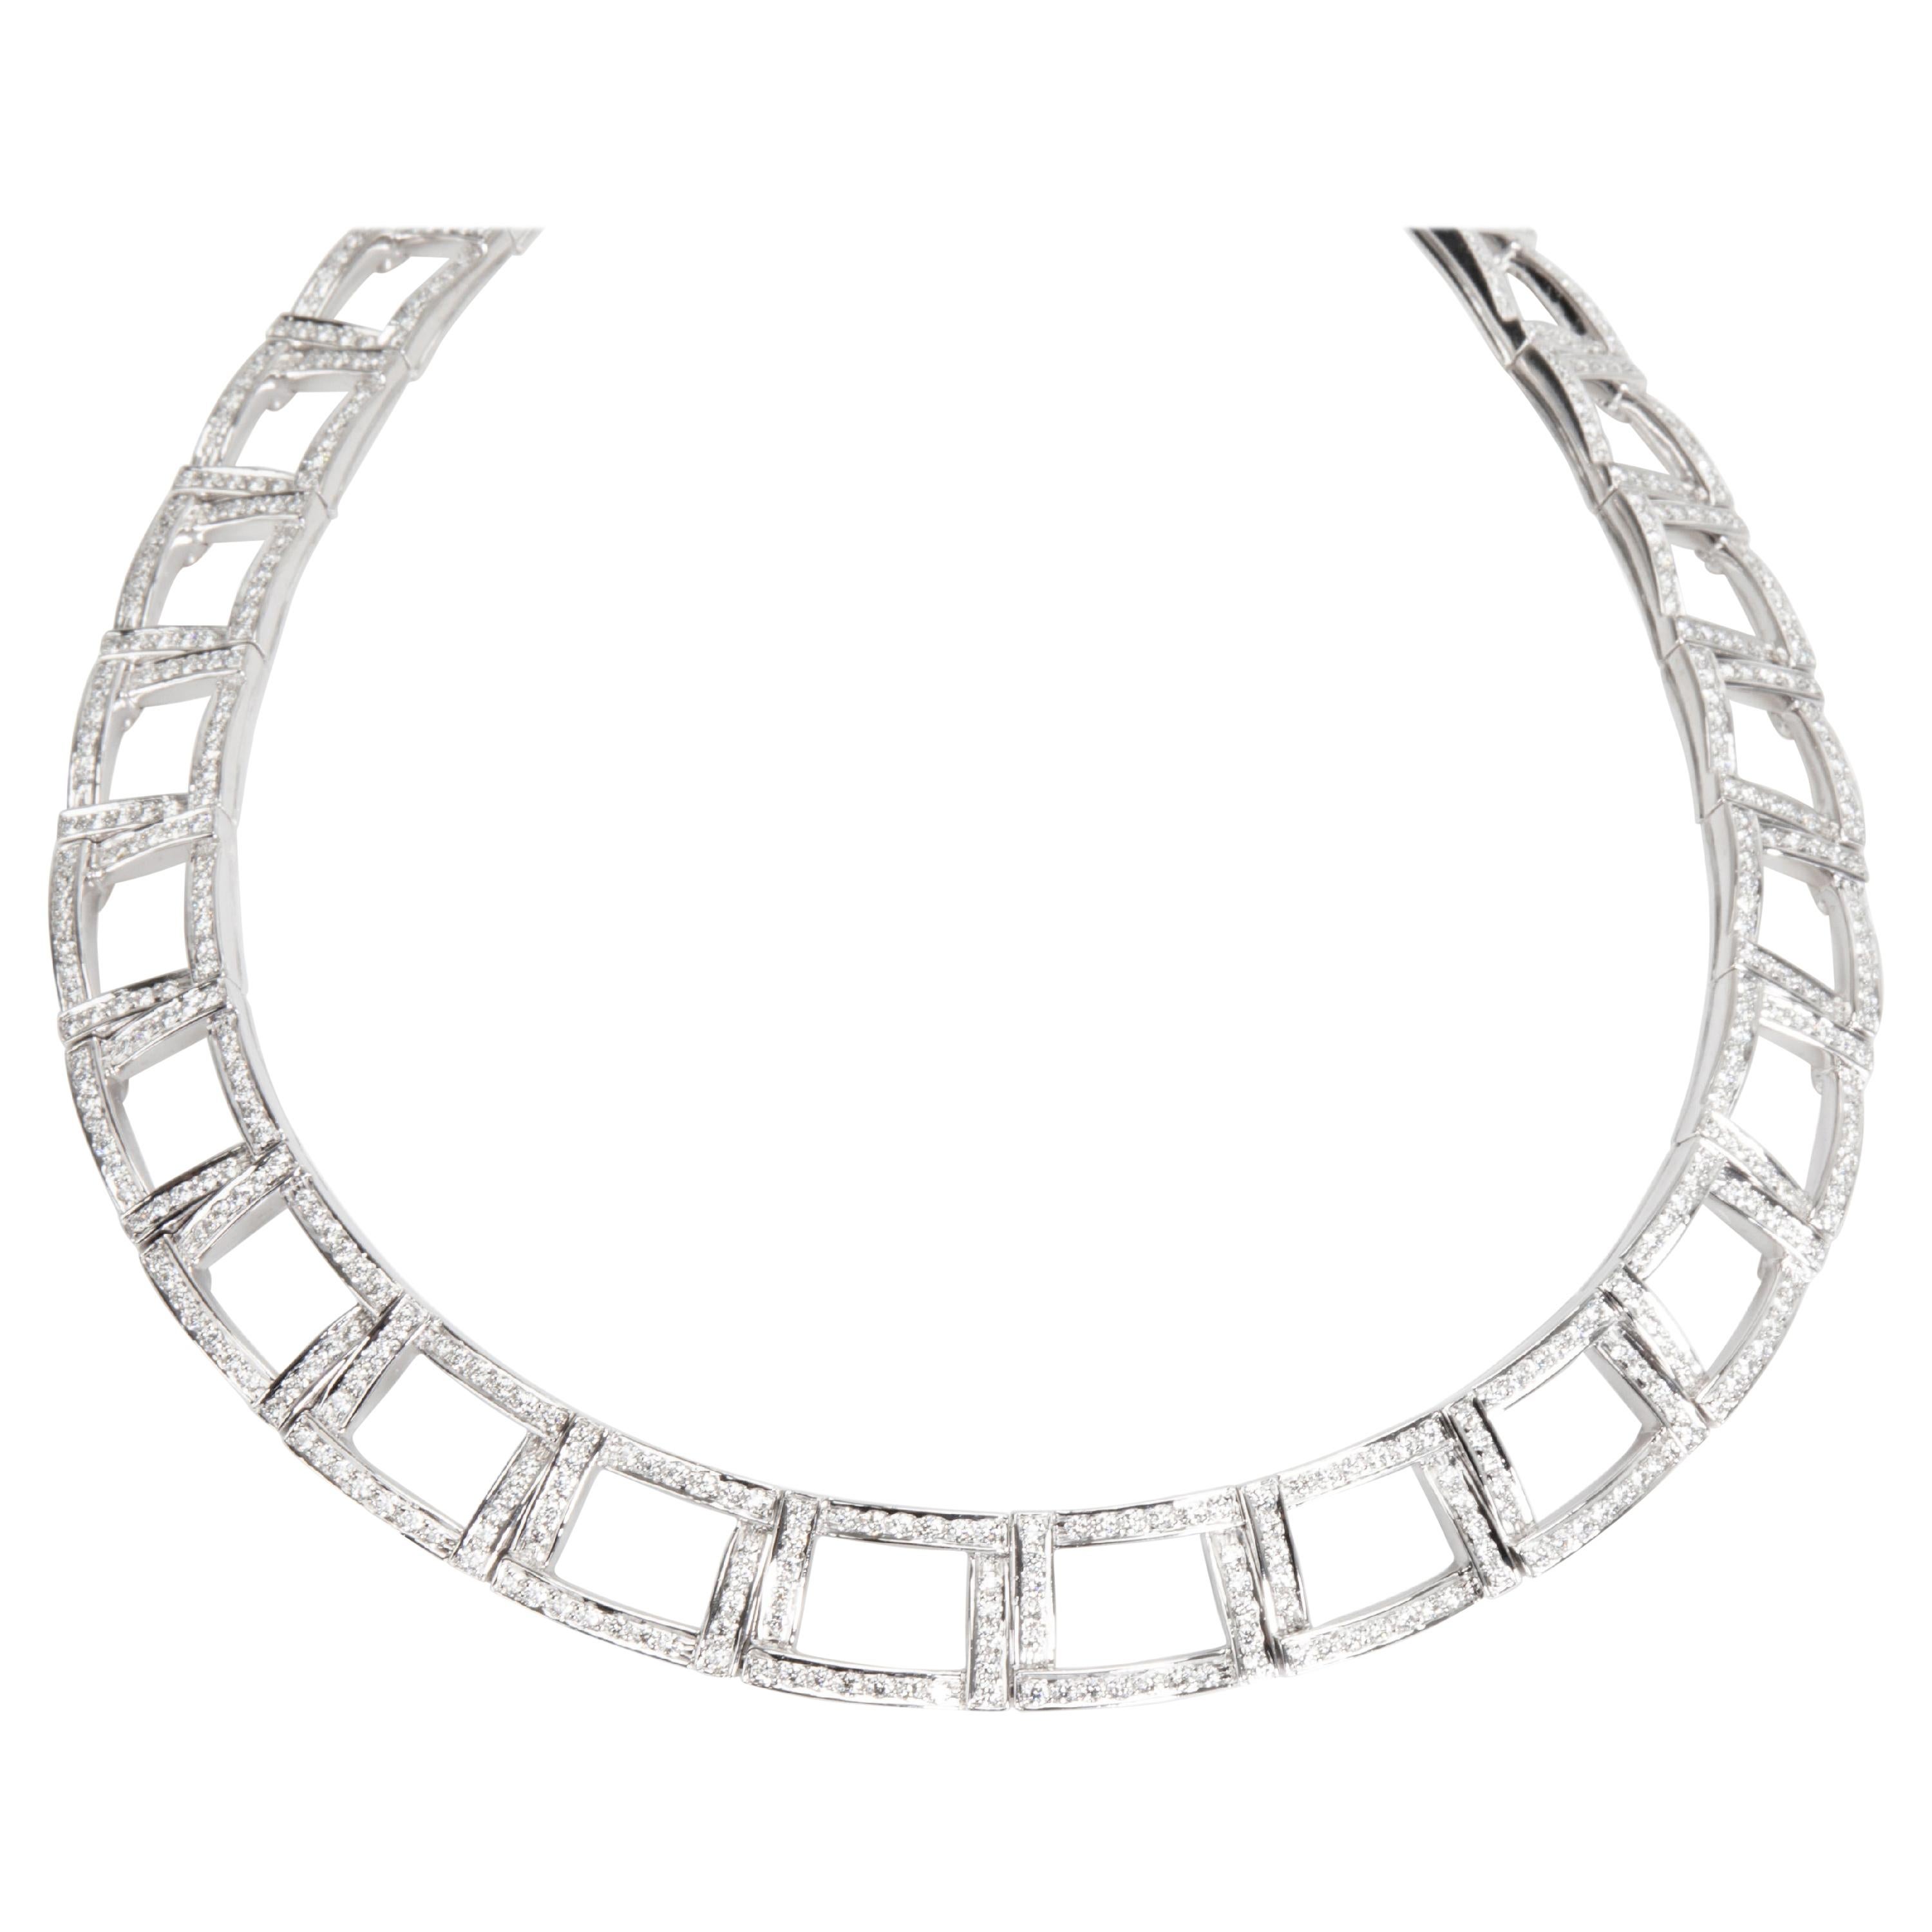 Tiffany & Co. Diamond Choker Necklace in Platinum 6.13 Carat